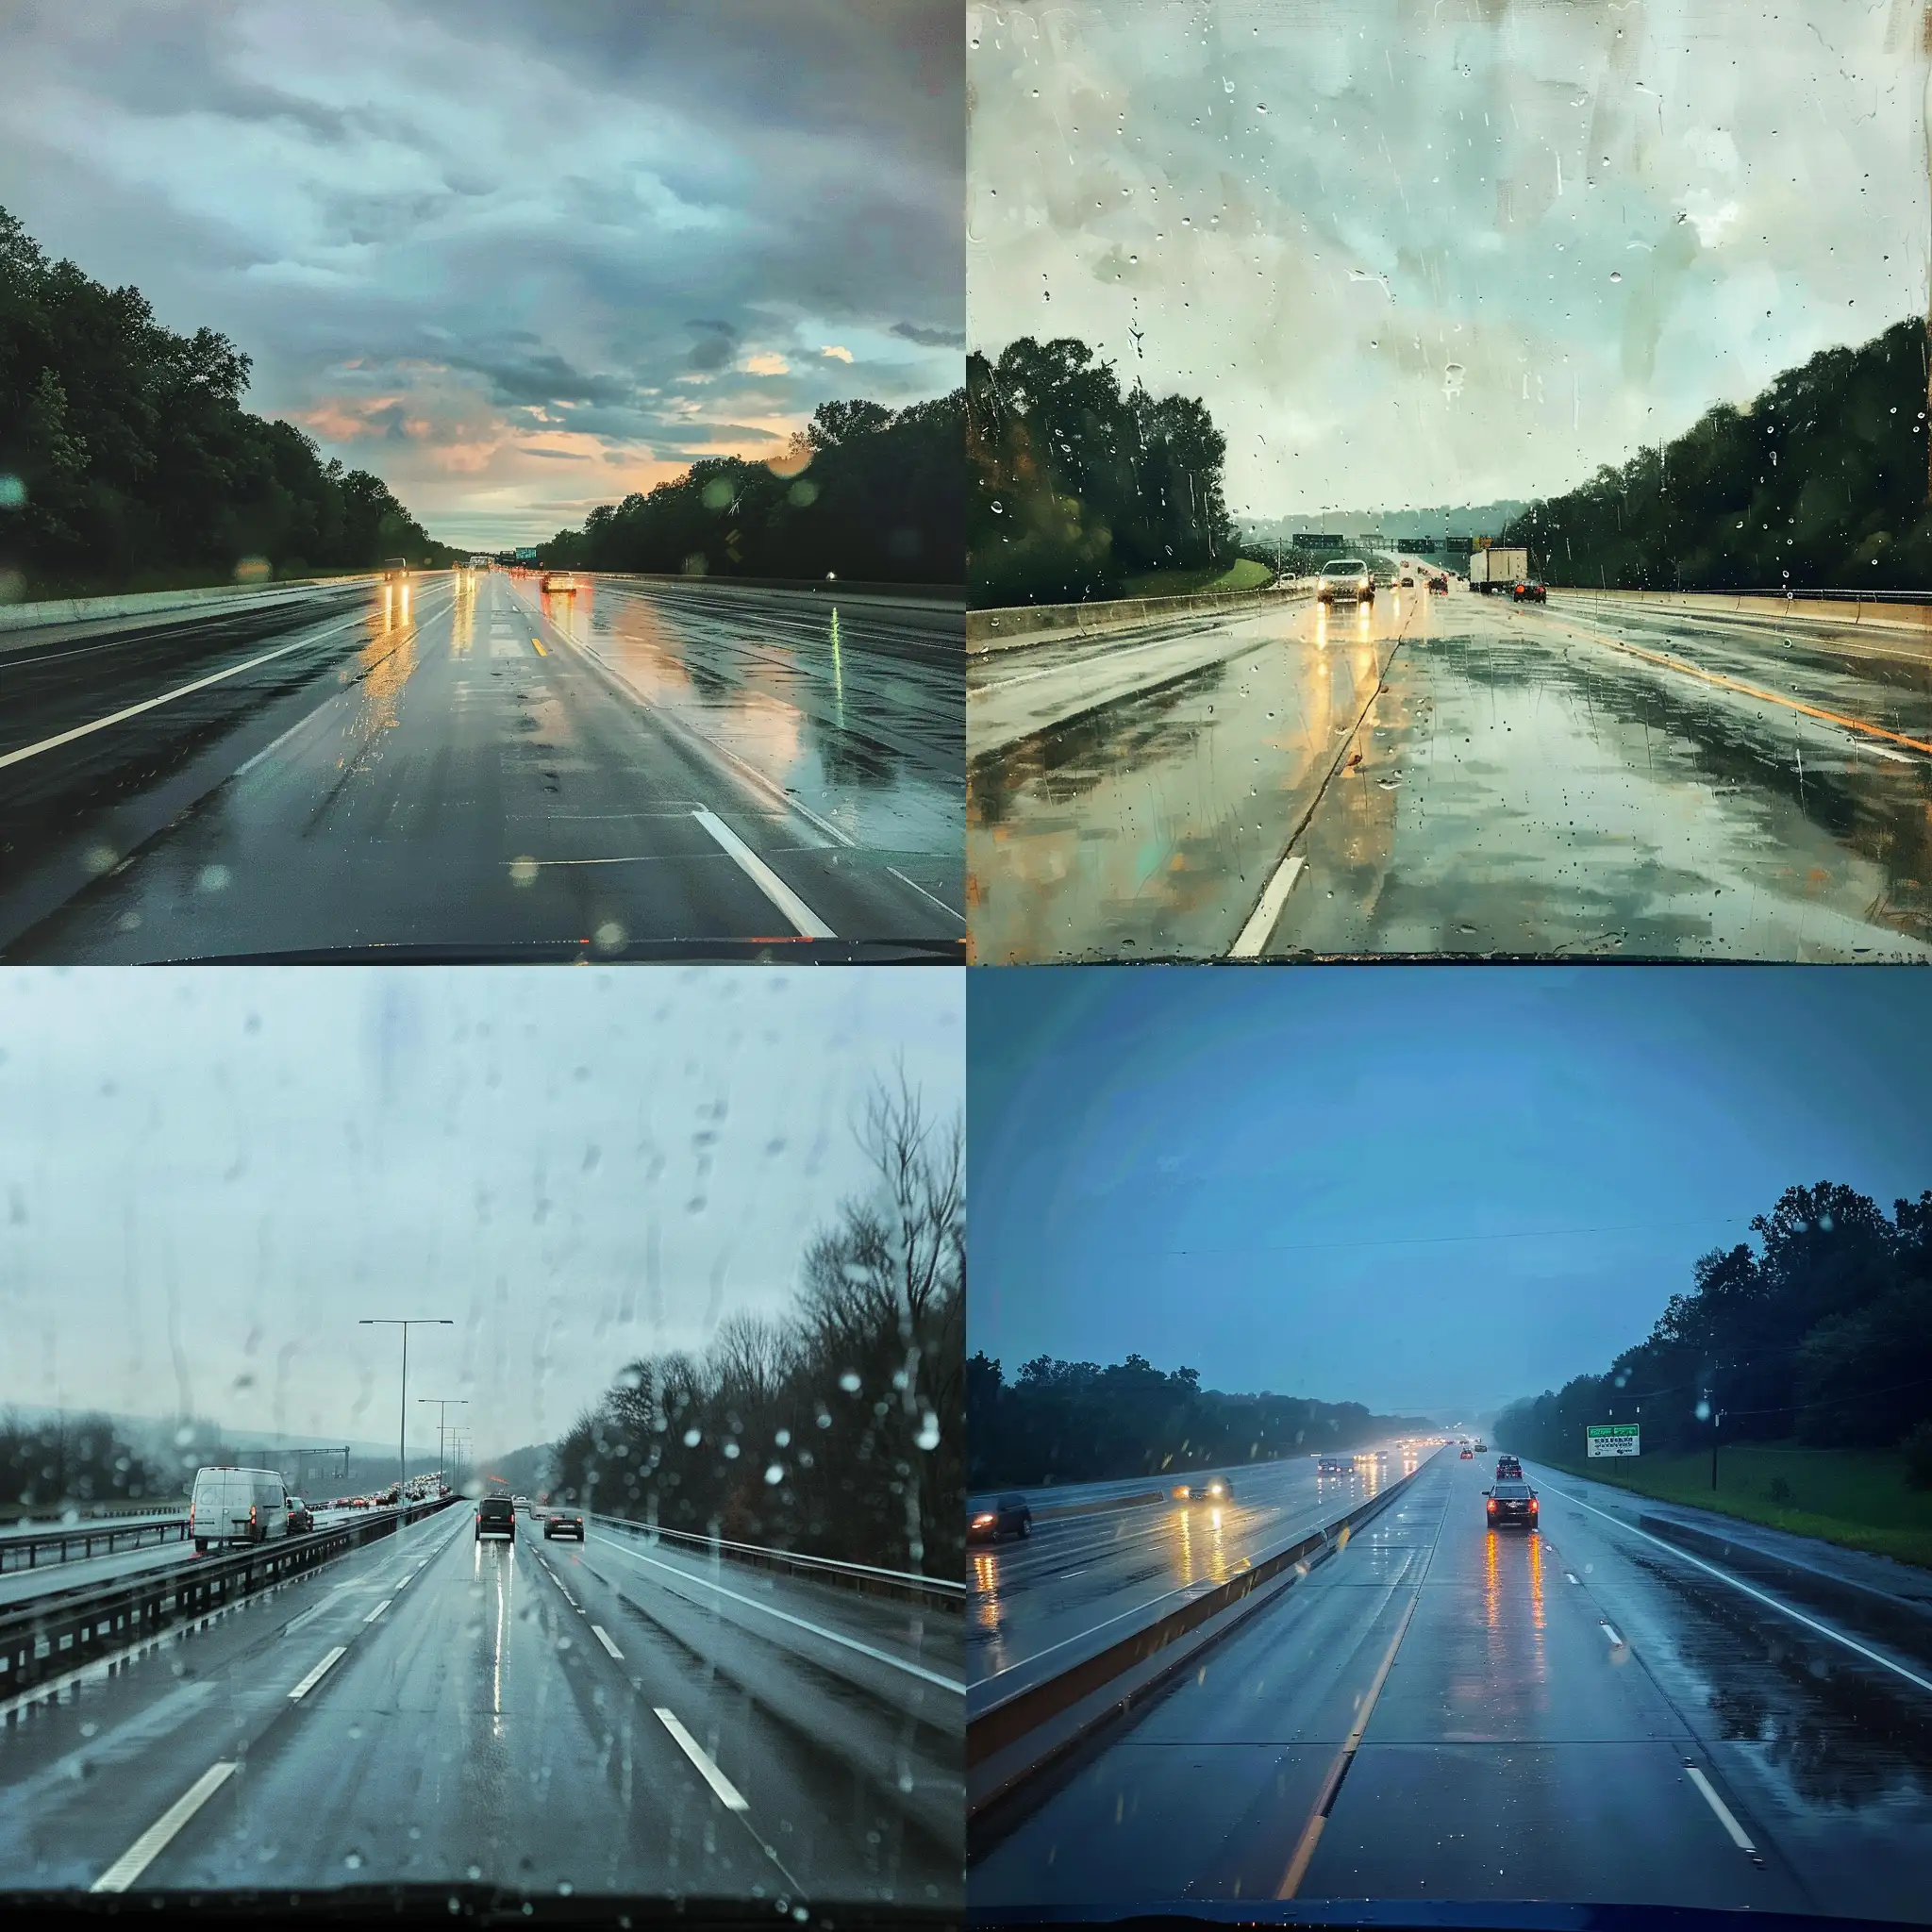 Rainy-Day-Highway-Scene-with-Overcast-Sky